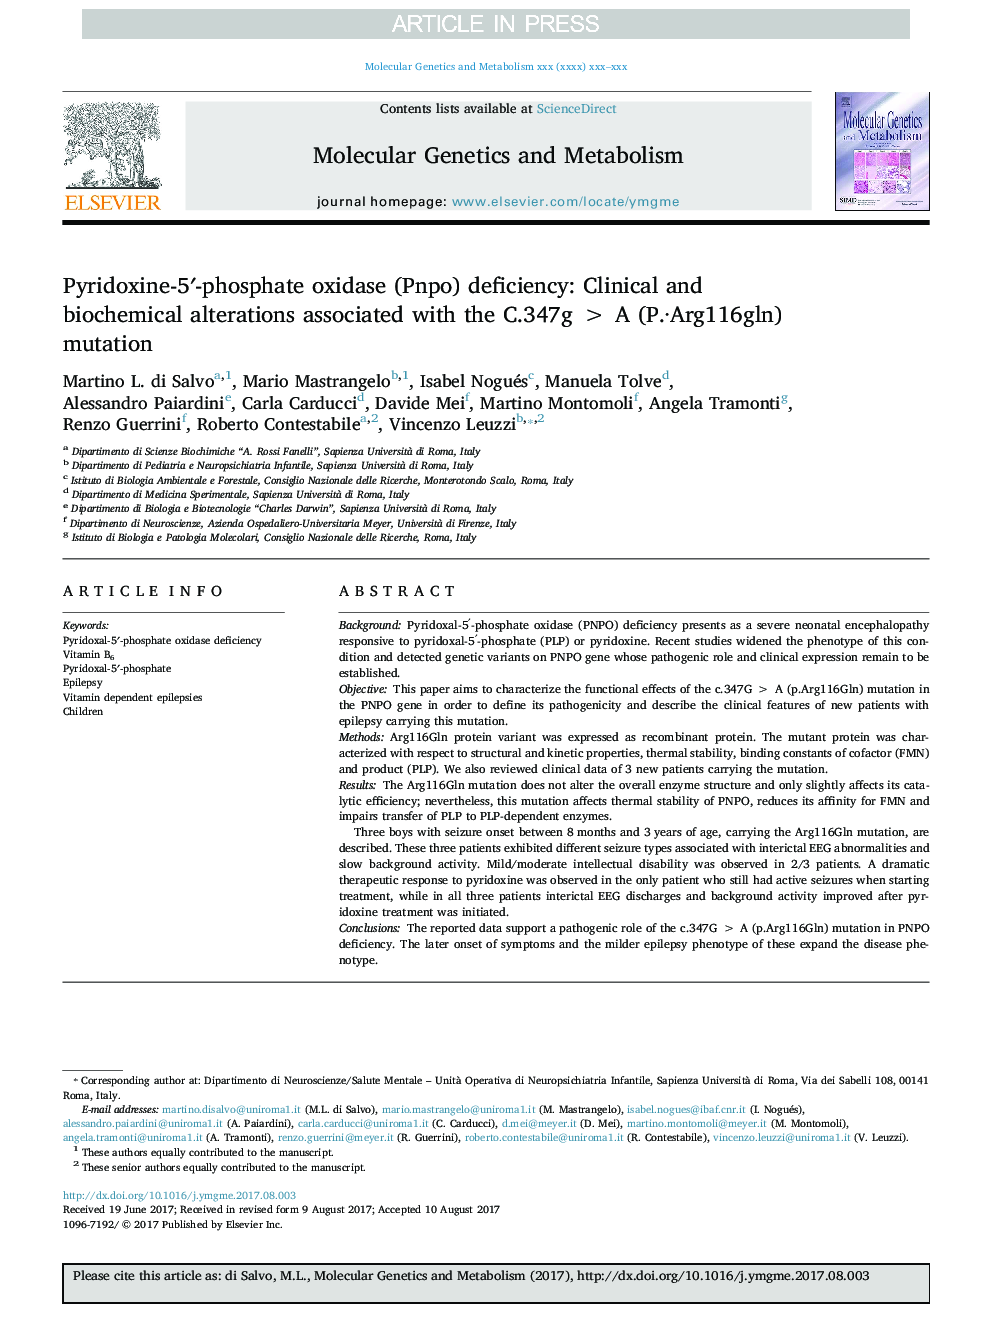 Pyridoxine-5â²-phosphate oxidase (Pnpo) deficiency: Clinical and biochemical alterations associated with the C.347gÂ >Â A (P.Â·Arg116gln) mutation